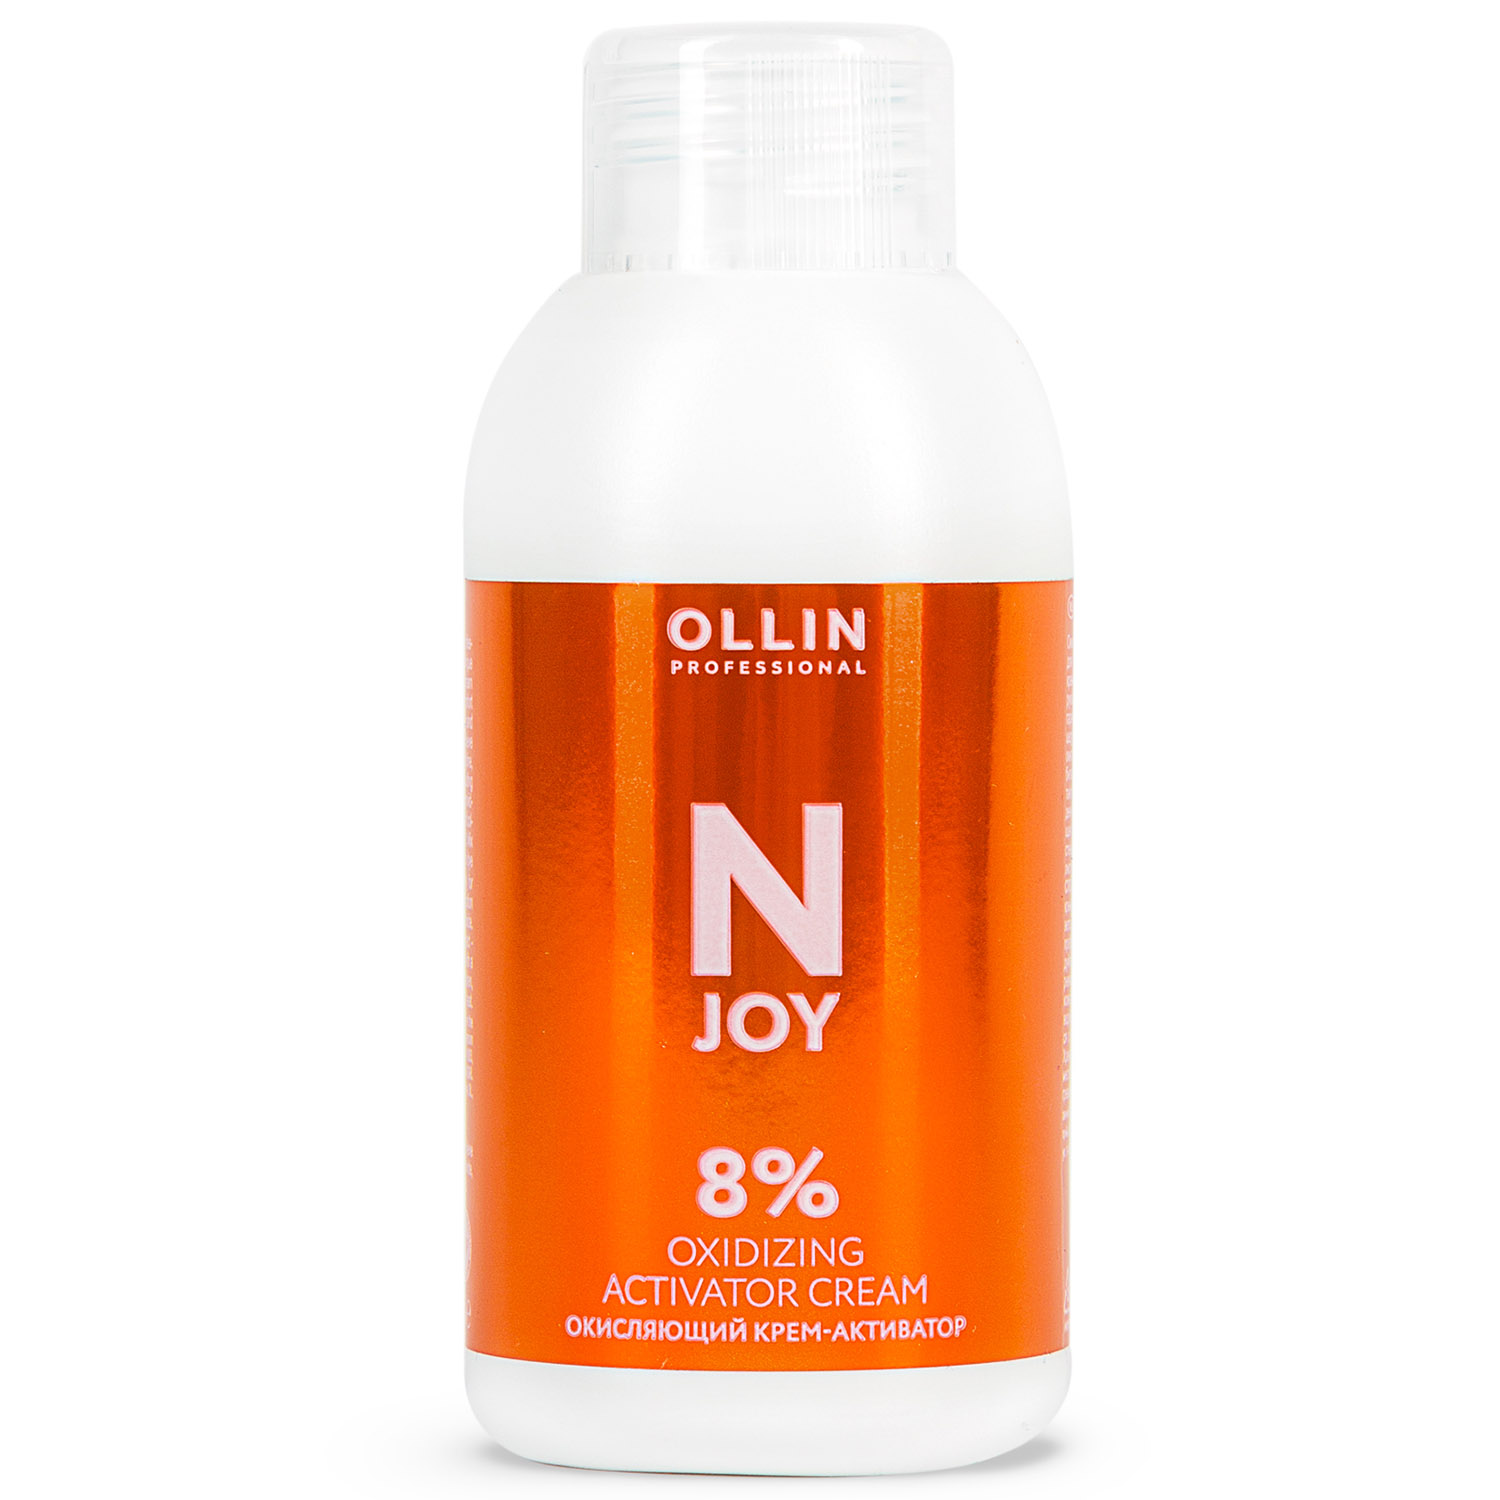 Ollin Professional Окисляющий крем-активатор 8%, 100 мл (Ollin Professional, N-Joy) ollin окисляющий крем активатор n joy 8% 1 л